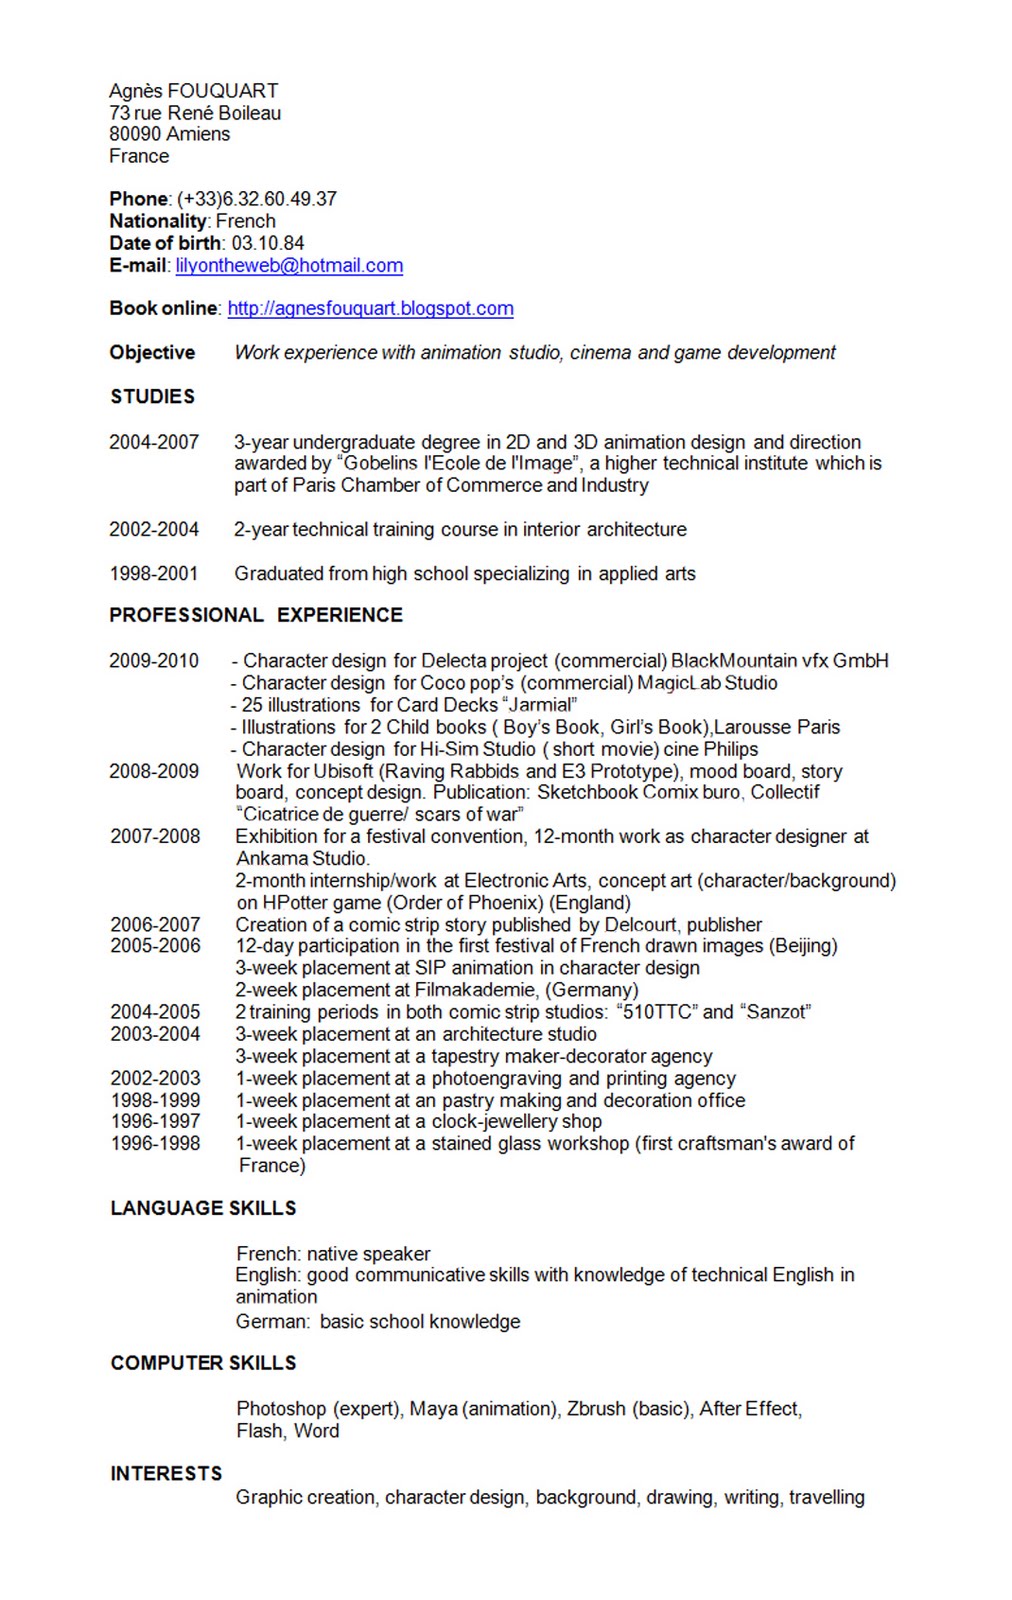 CV/ Resume